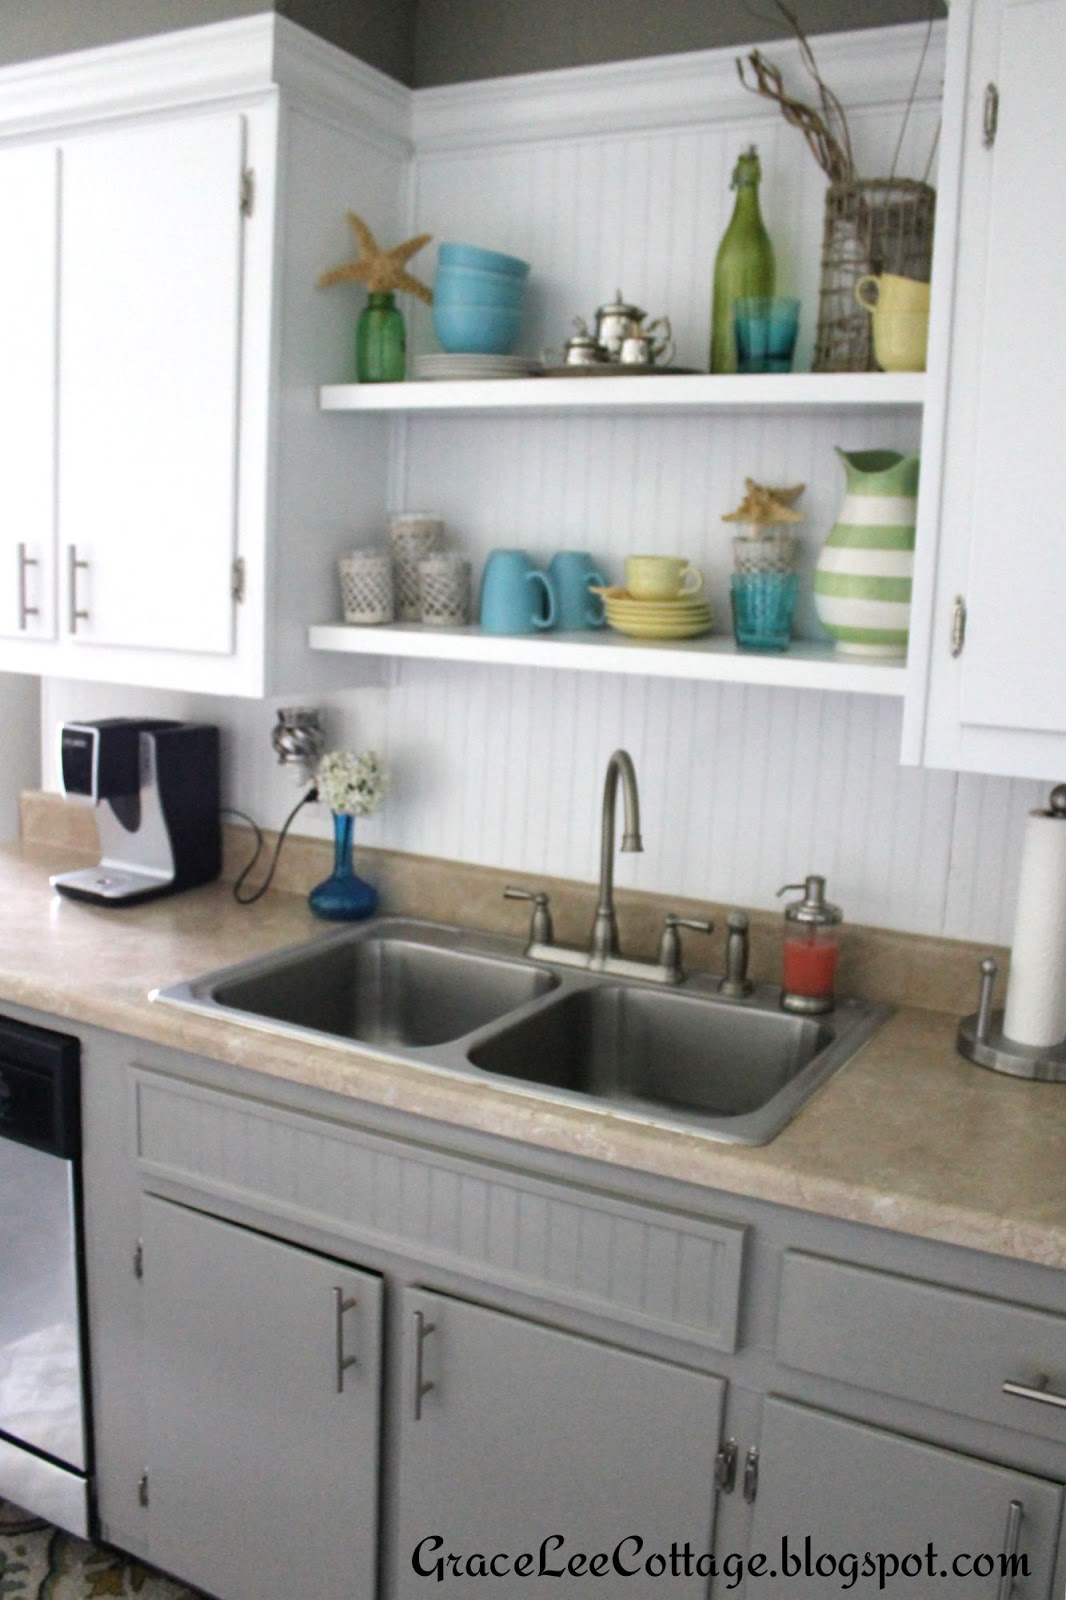 Grace Lee Cottage: Updating old kitchen cabinets